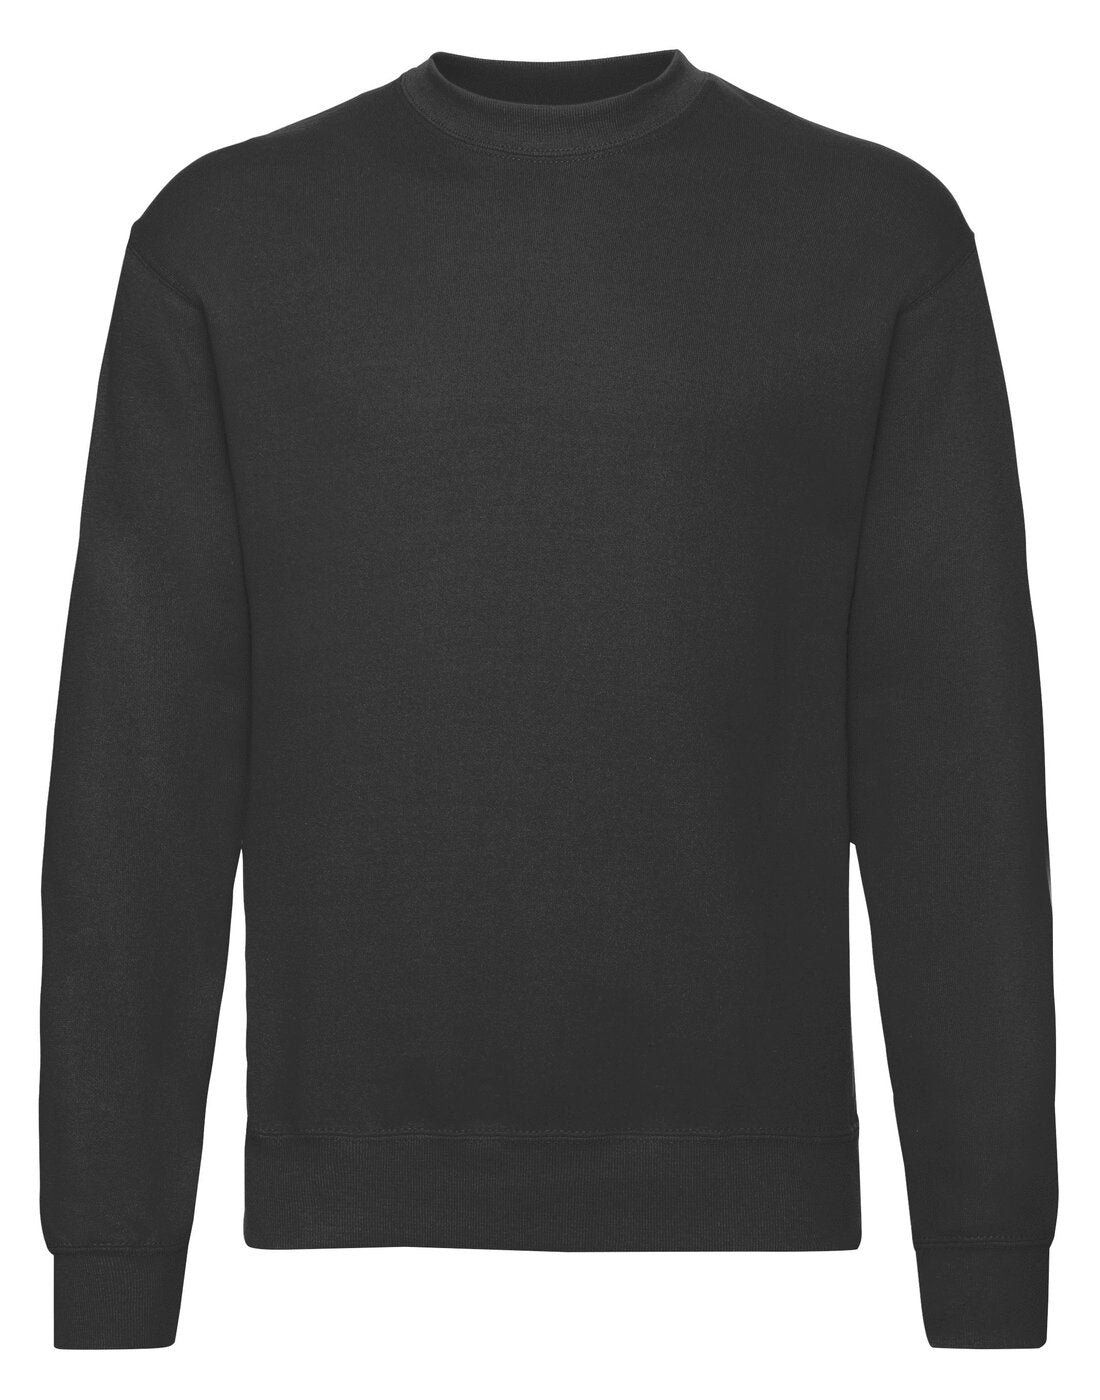 Fruit of the Loom Classic Set-In Sweatshirt - Black